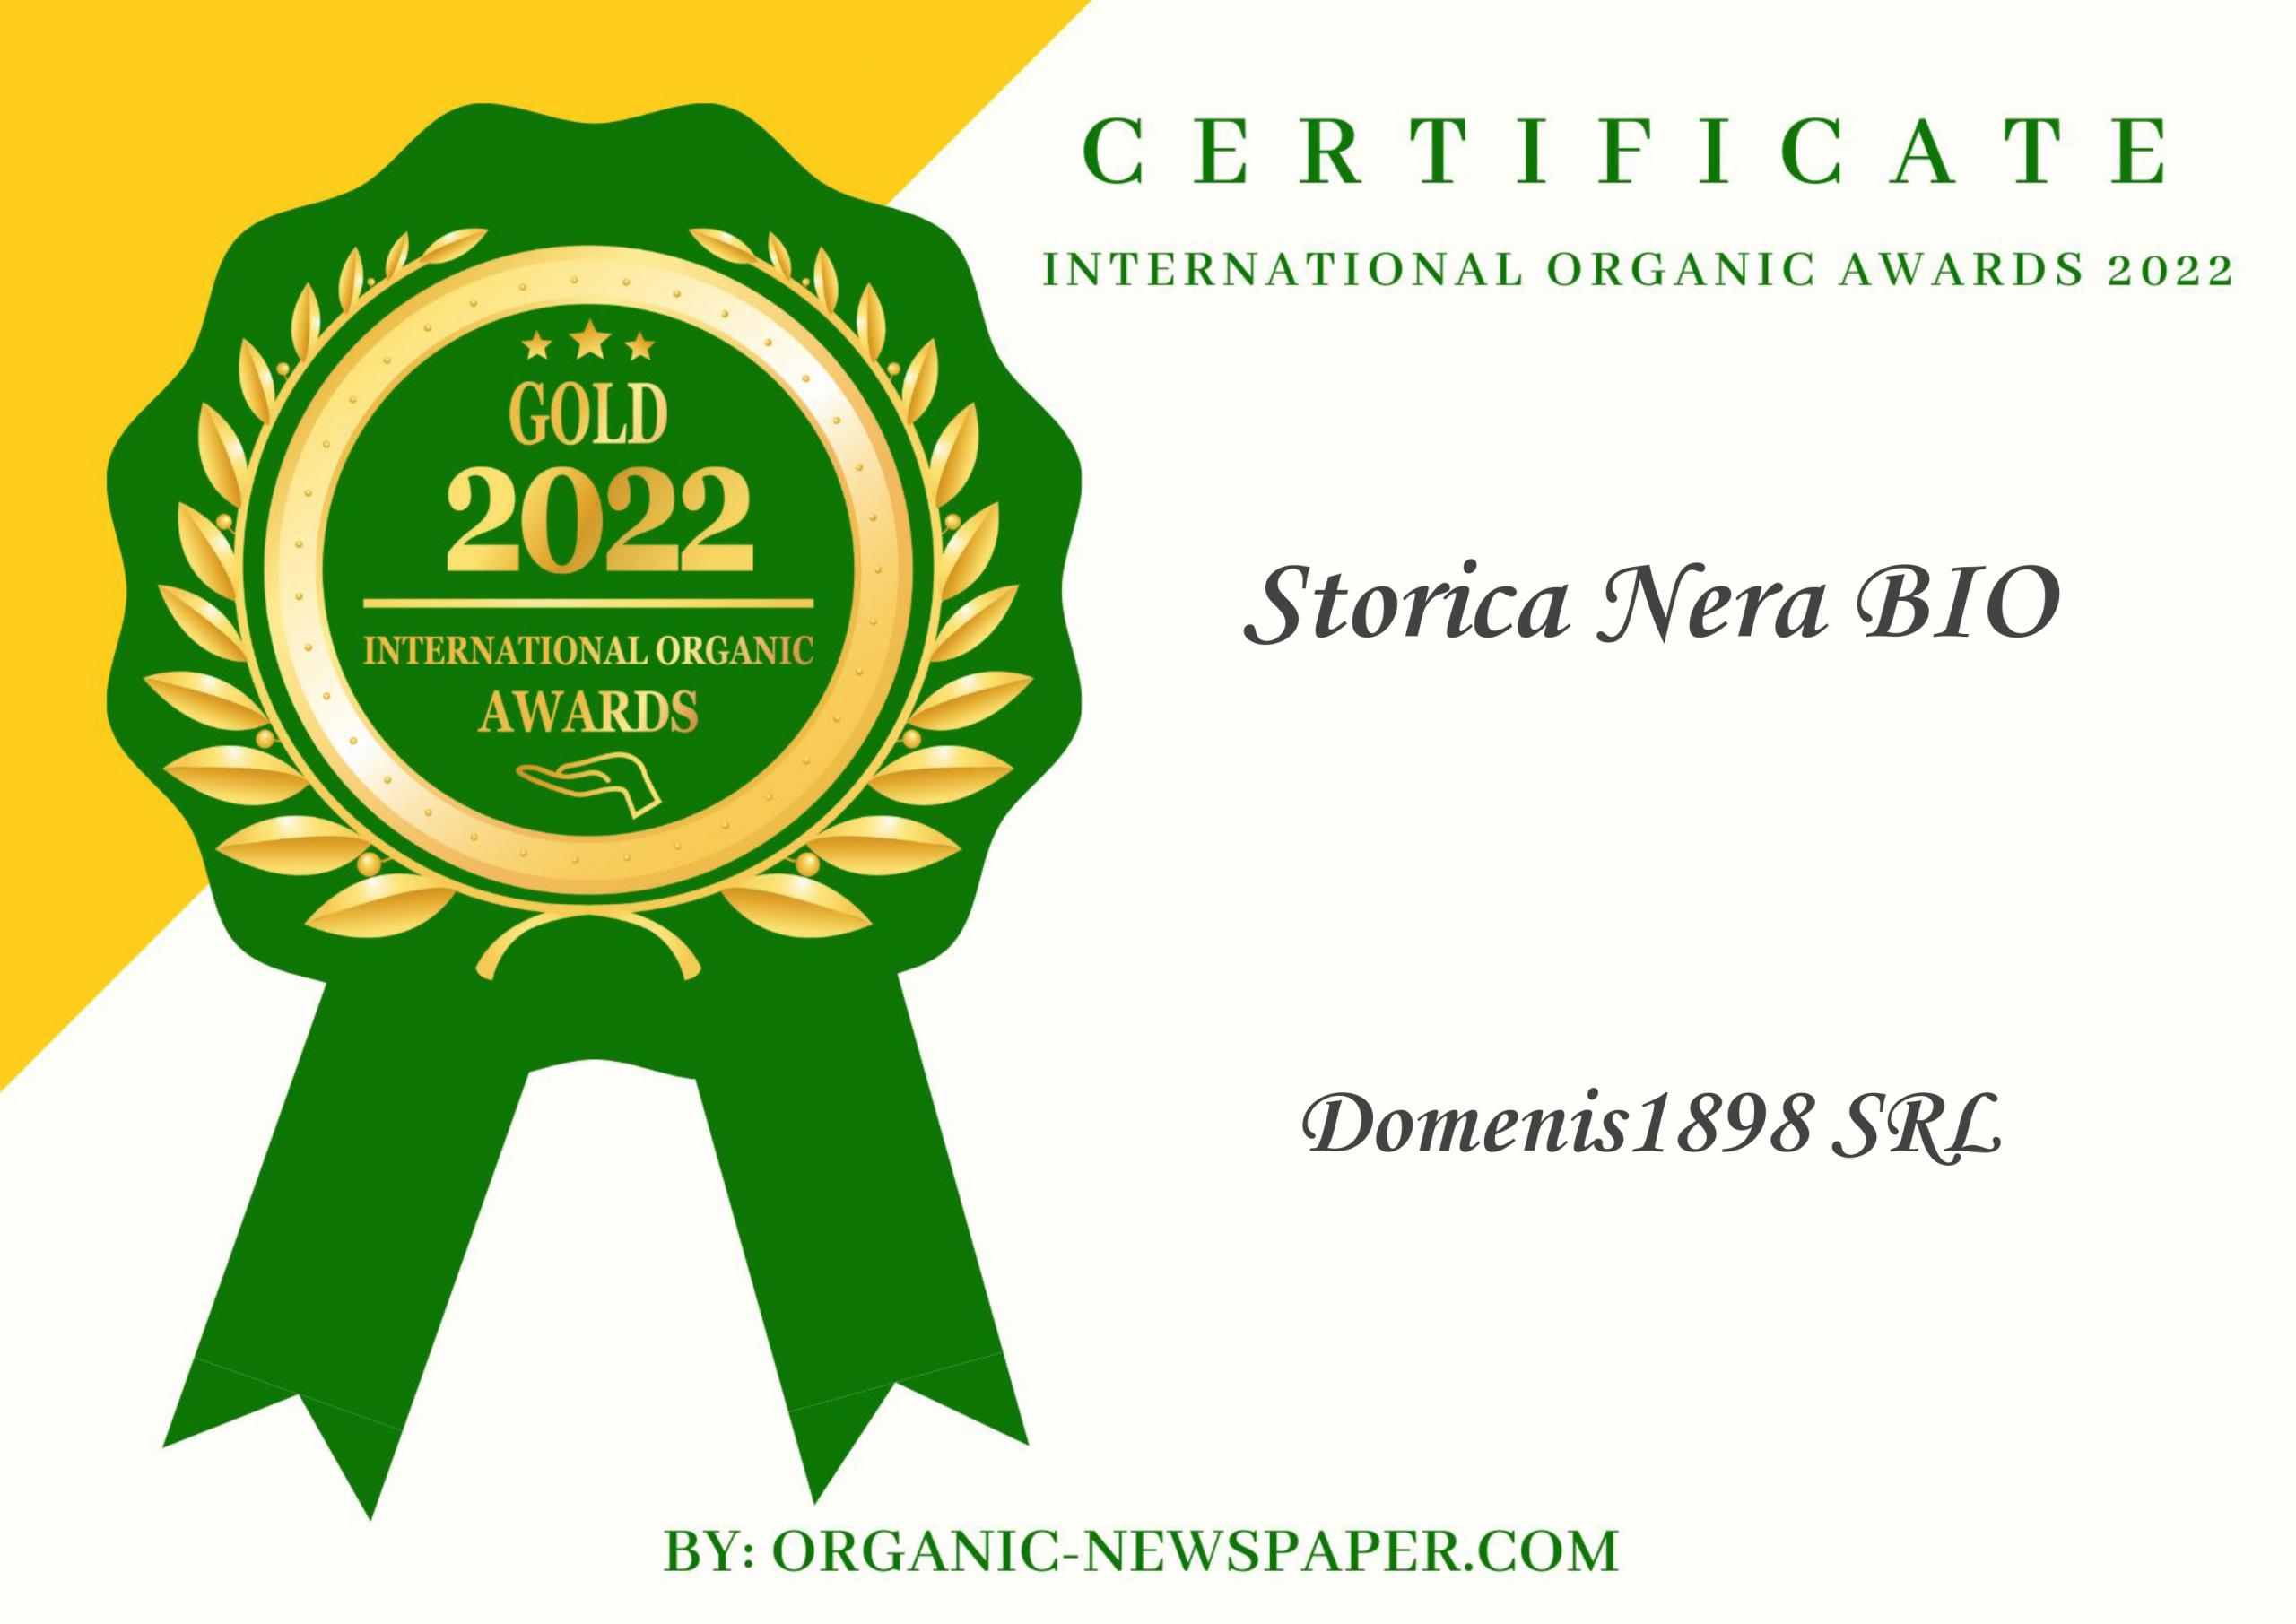 International Organic Awards 2022 – Gold Award – Storica Nera BIO